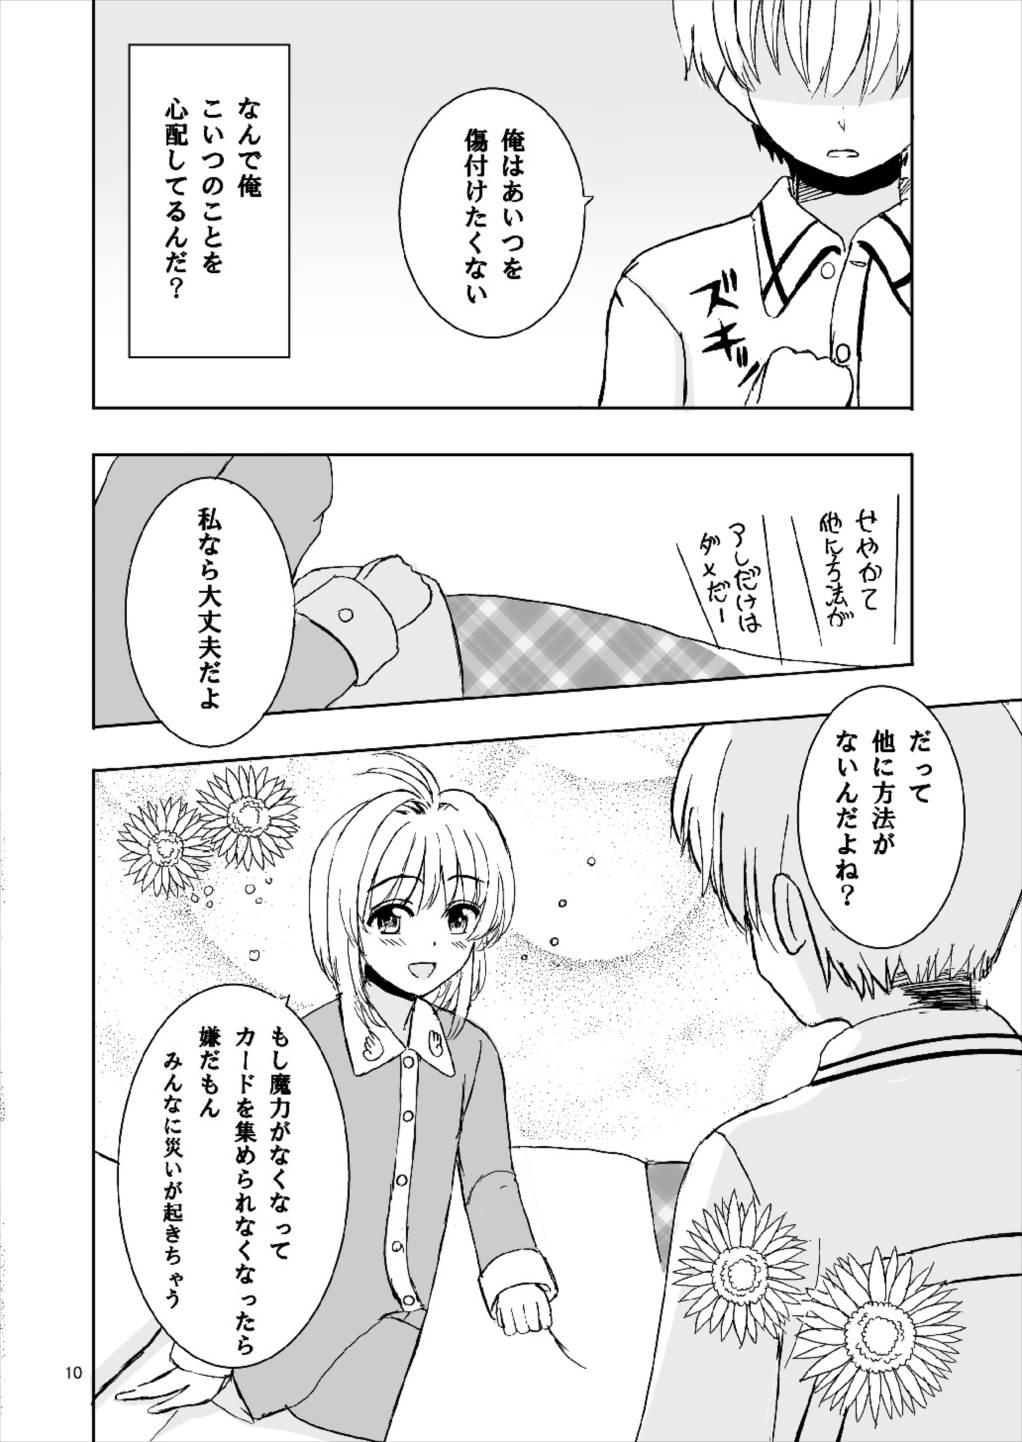 Awesome Sakura to Issho! - Cardcaptor sakura Alternative - Page 10